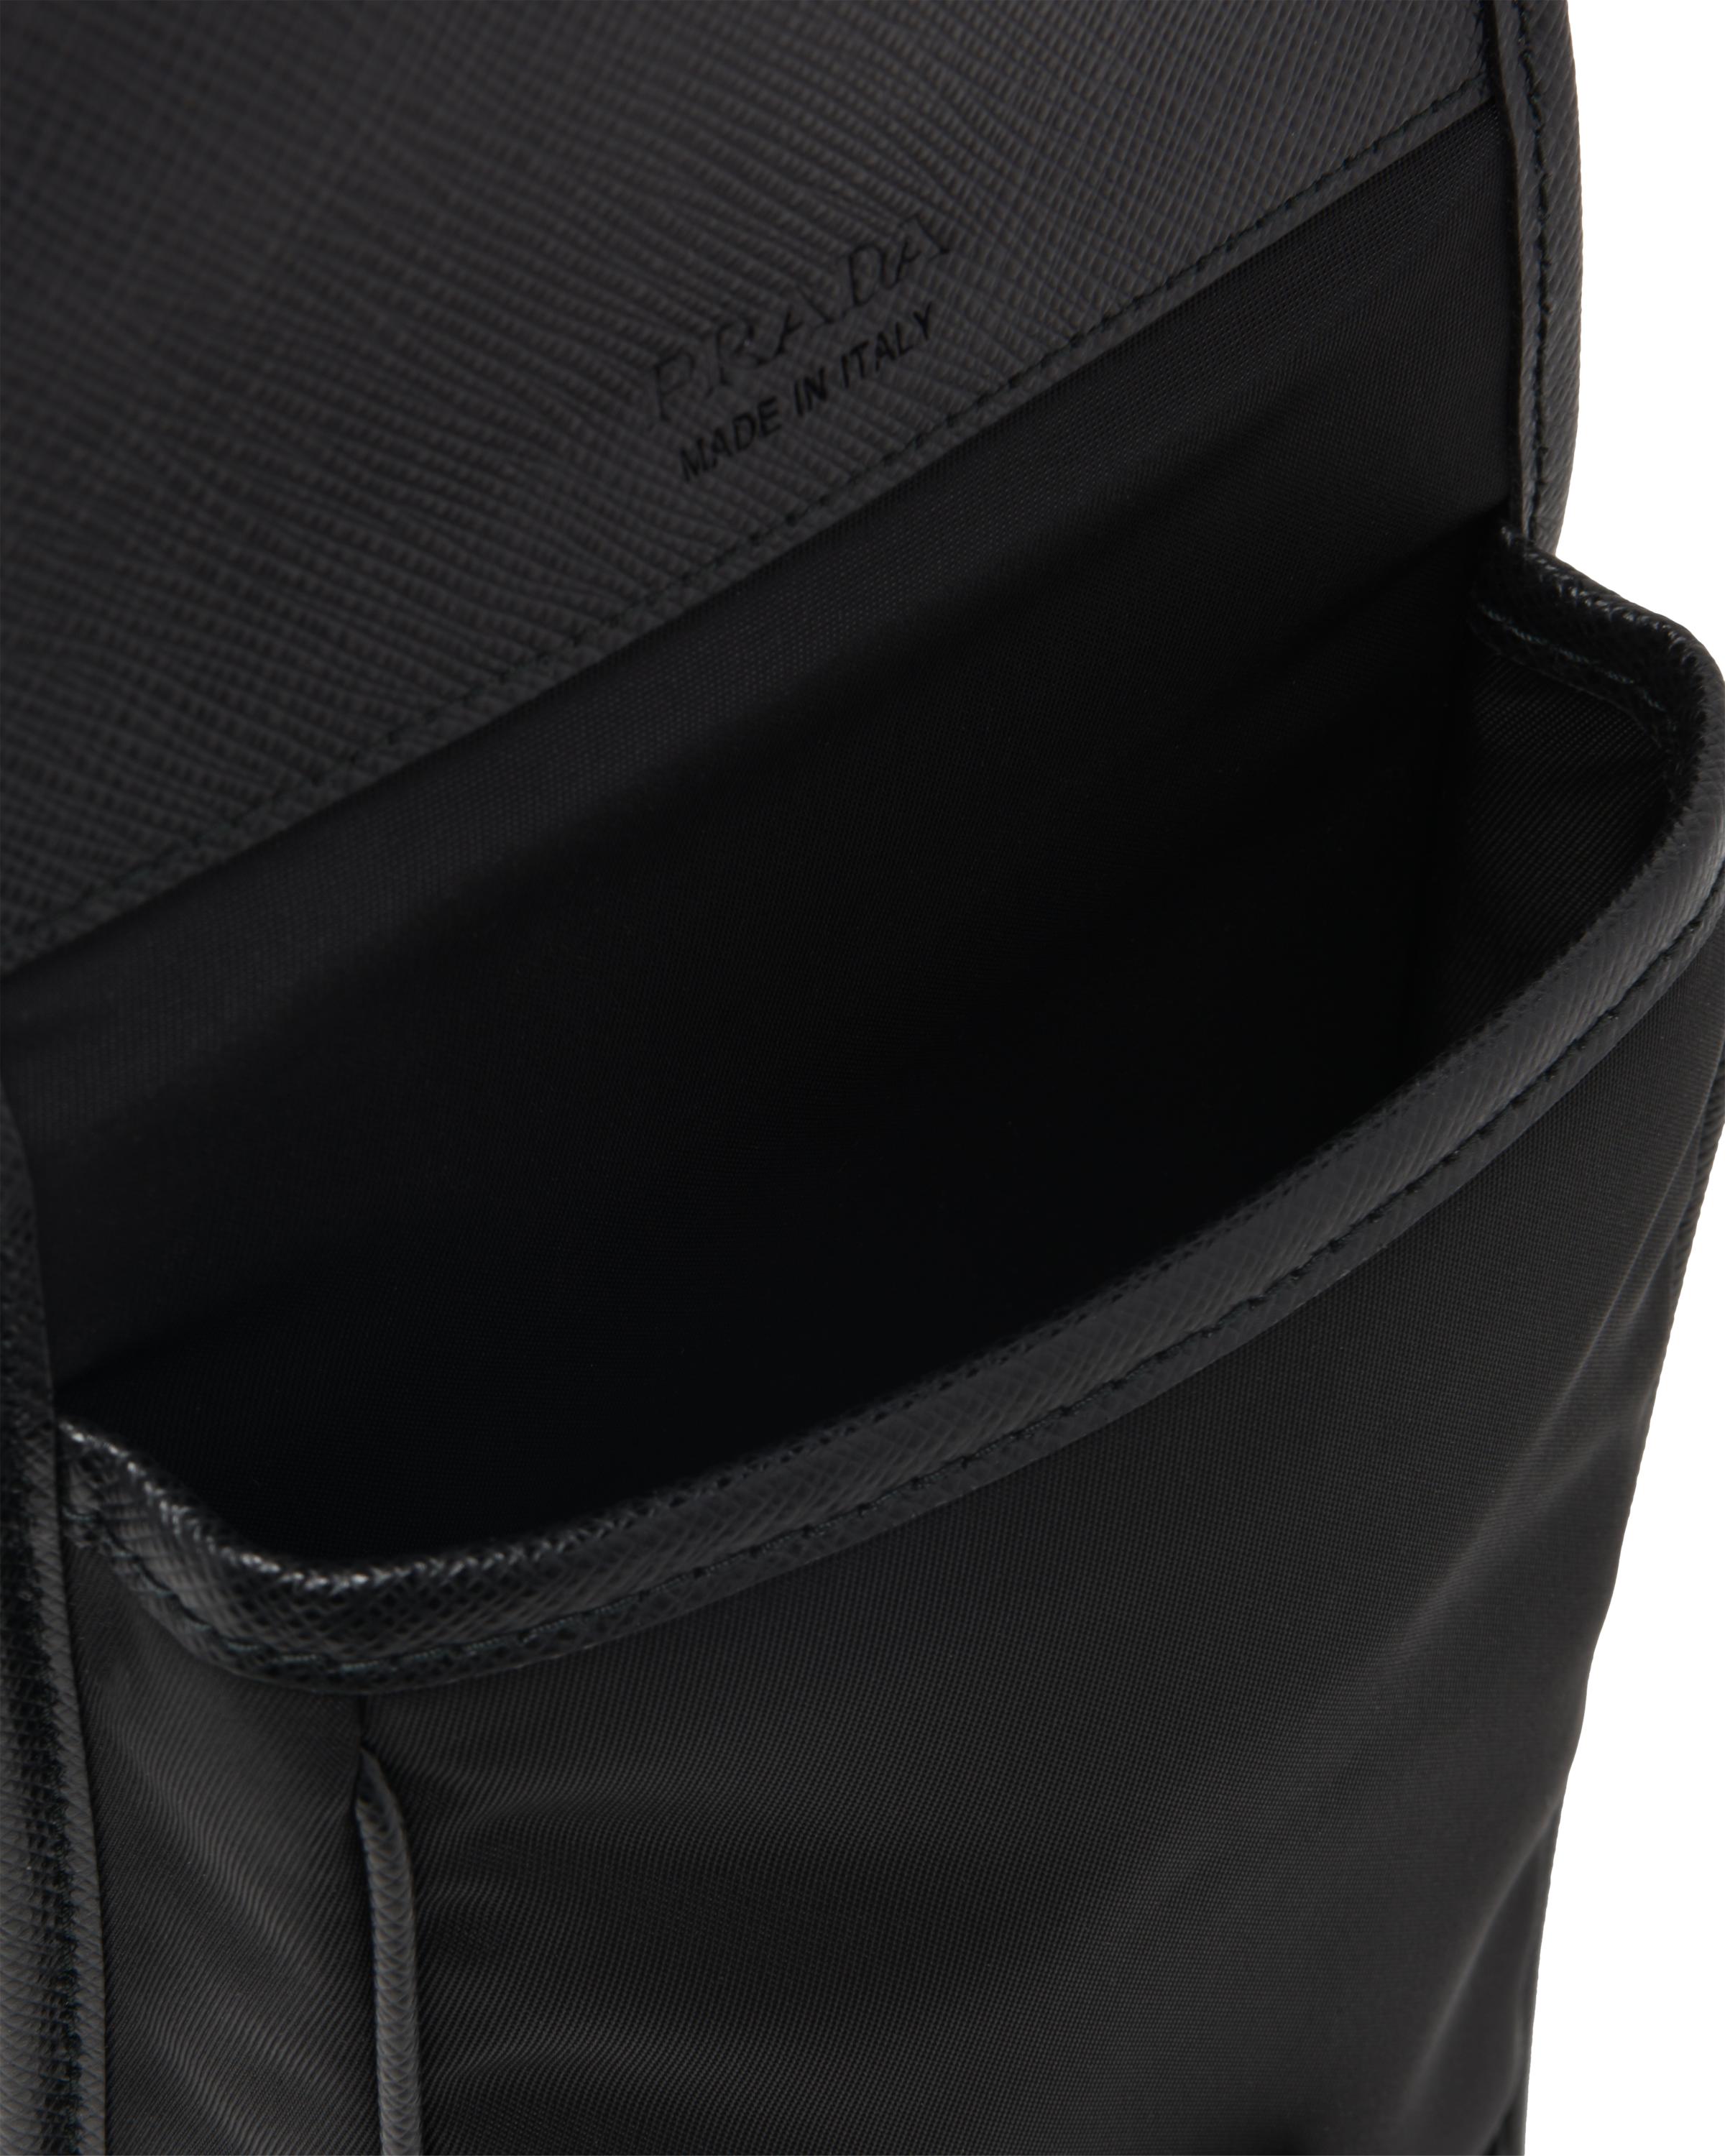 Prada Synthetic Re-nylon And Saffiano Leather Smartphone Case in 